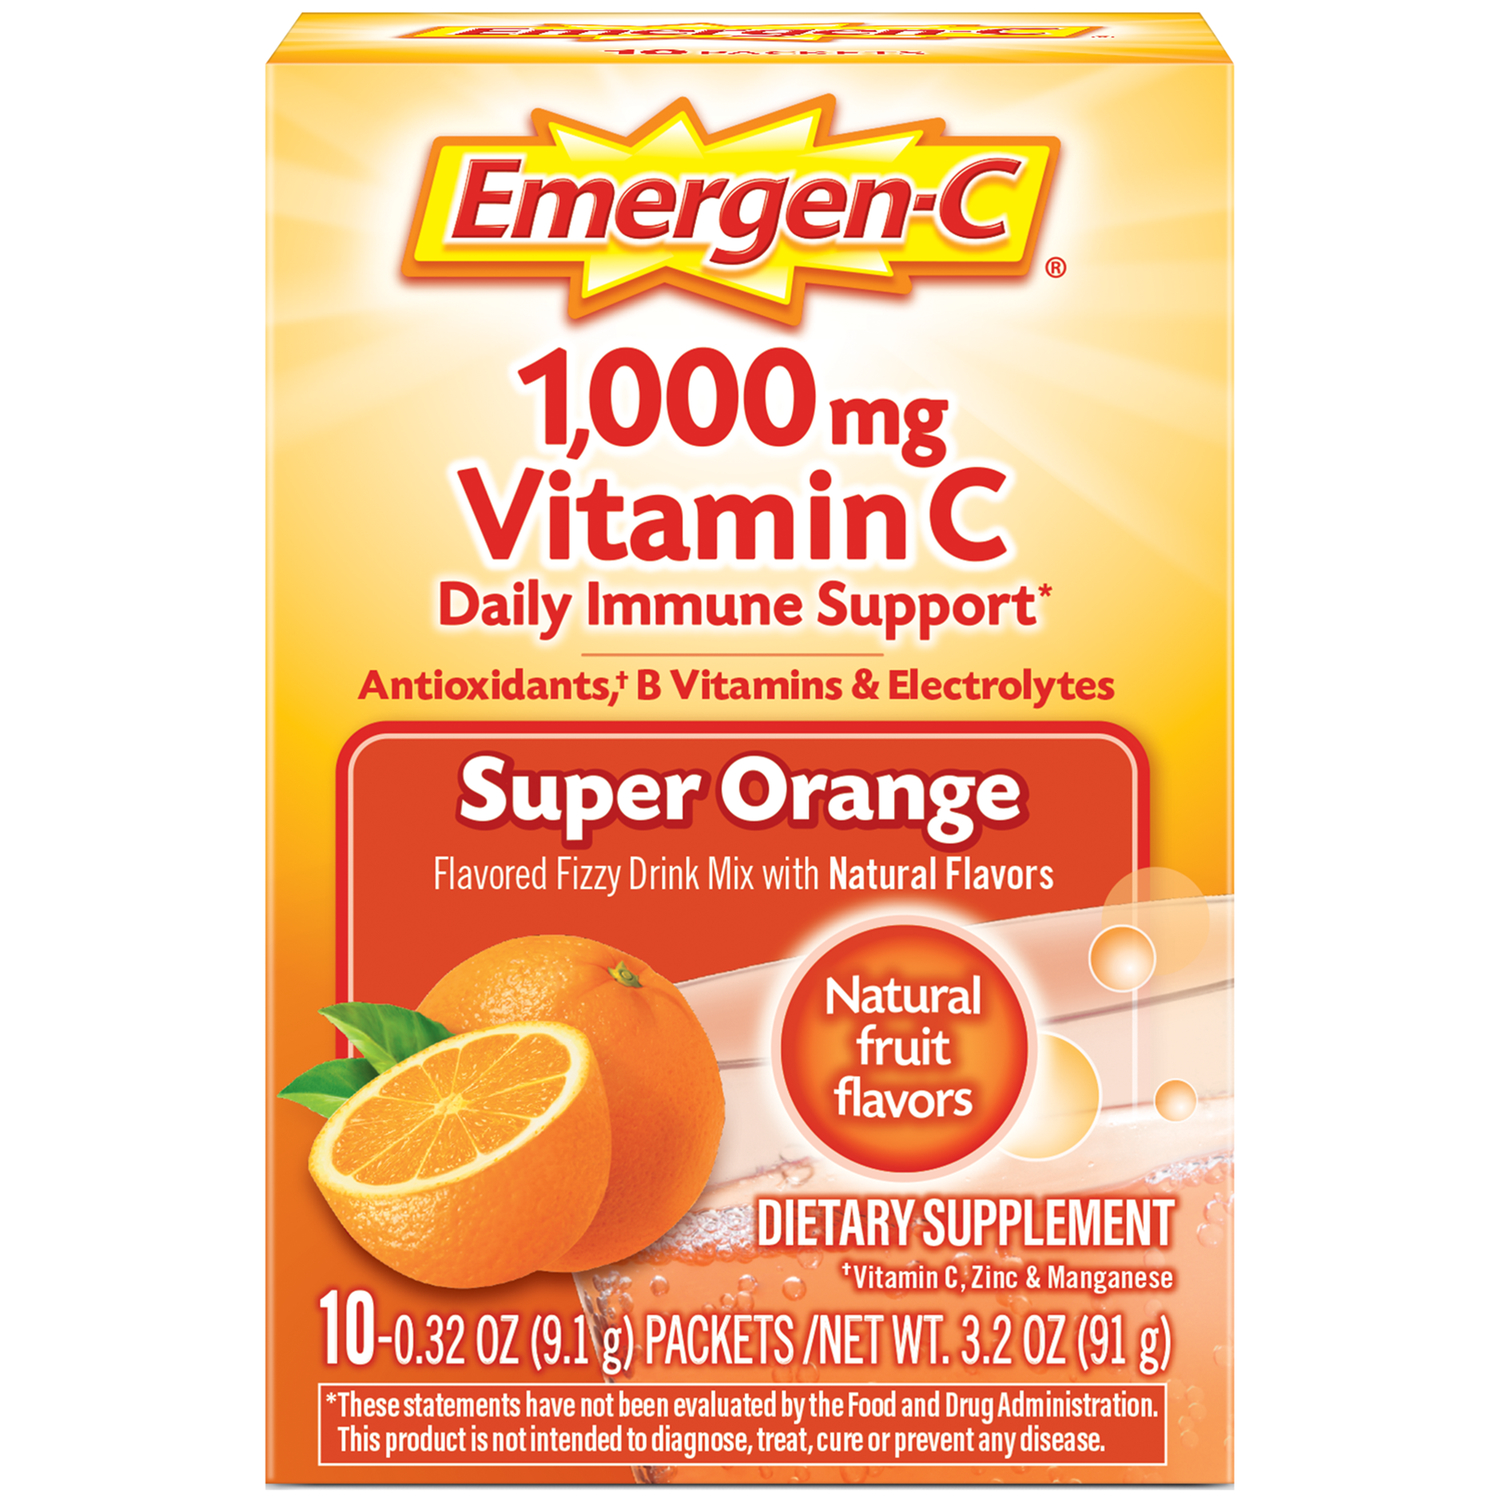 Emergen C 1000mg Vitamin C Powder With Antioxidants B Vitamins And Electrolytes For Immune Support Caffeine Free Vitamin C Supplement Fizzy Drink Mix Super Orange Flavor 10 Count Lazada Ph